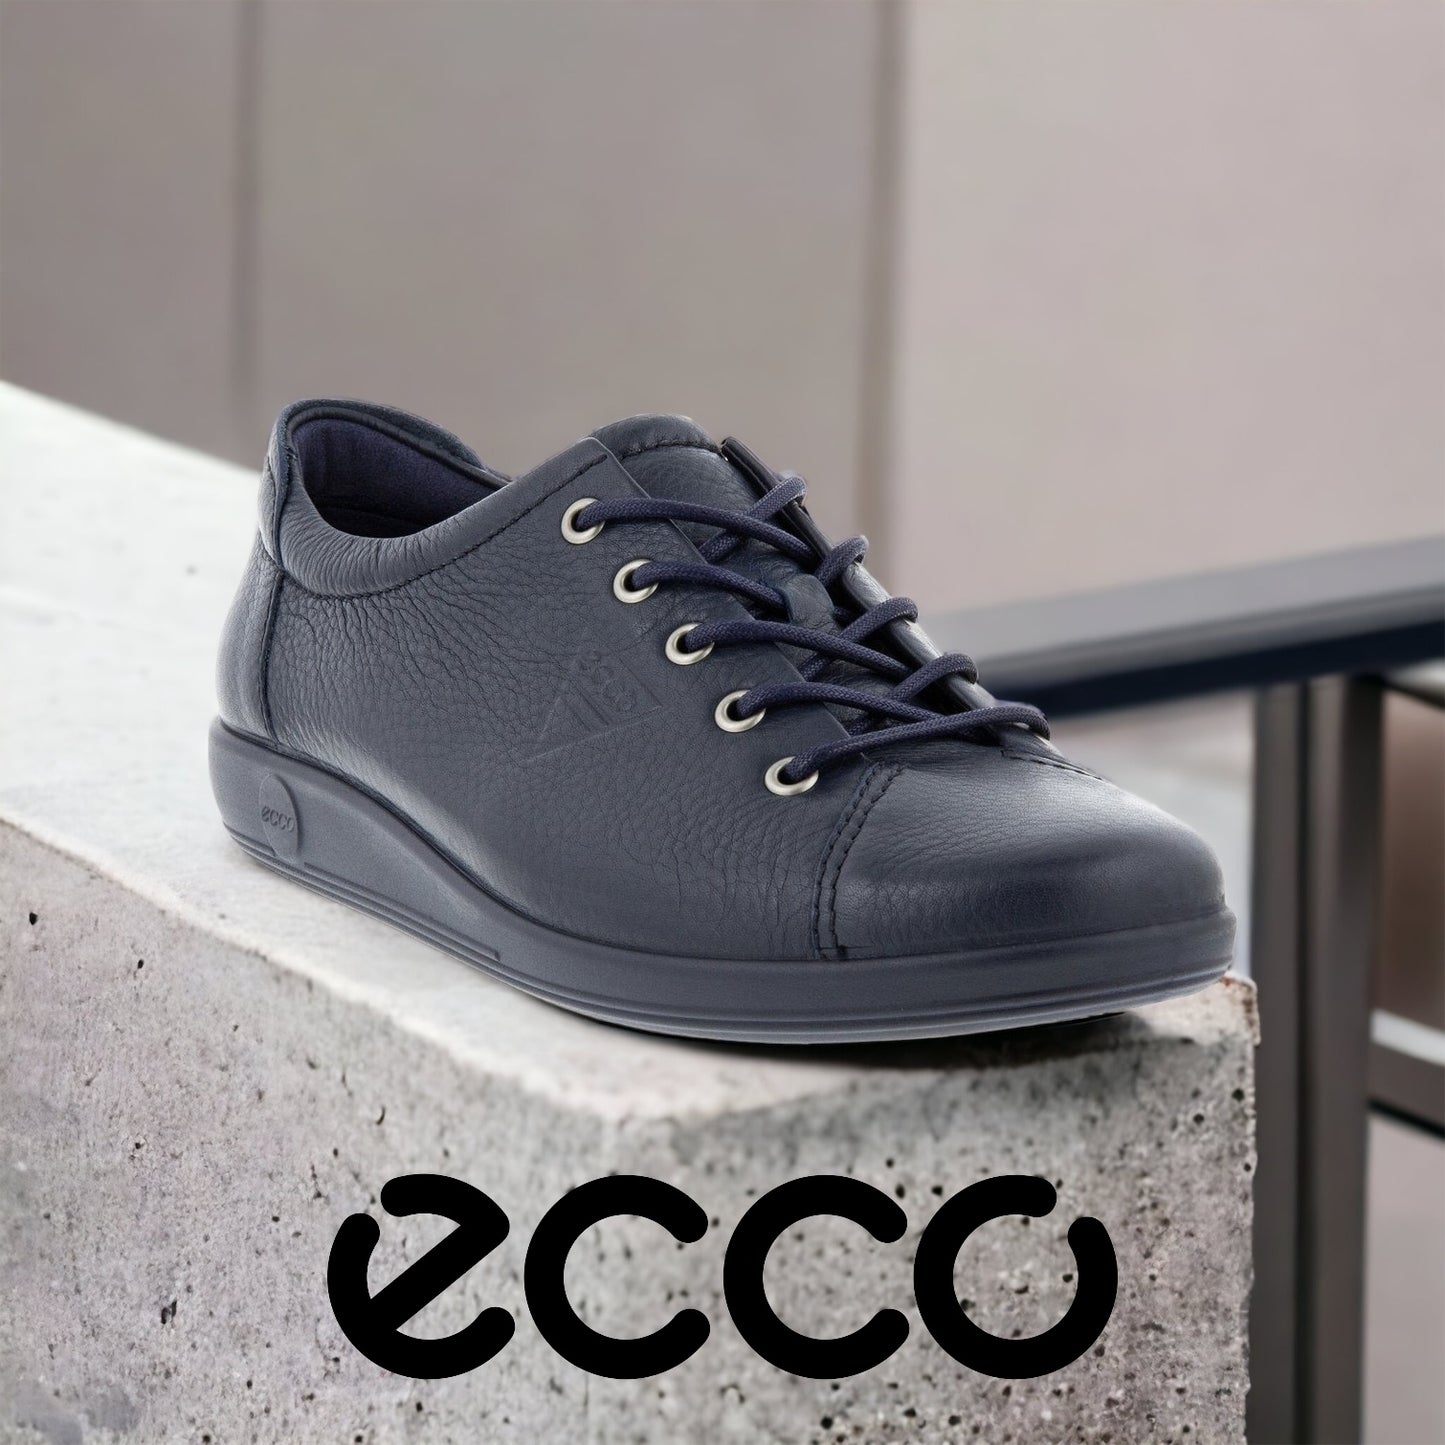 Ecco Soft 2.0 navy leather - Kirbys Footwear Ltd